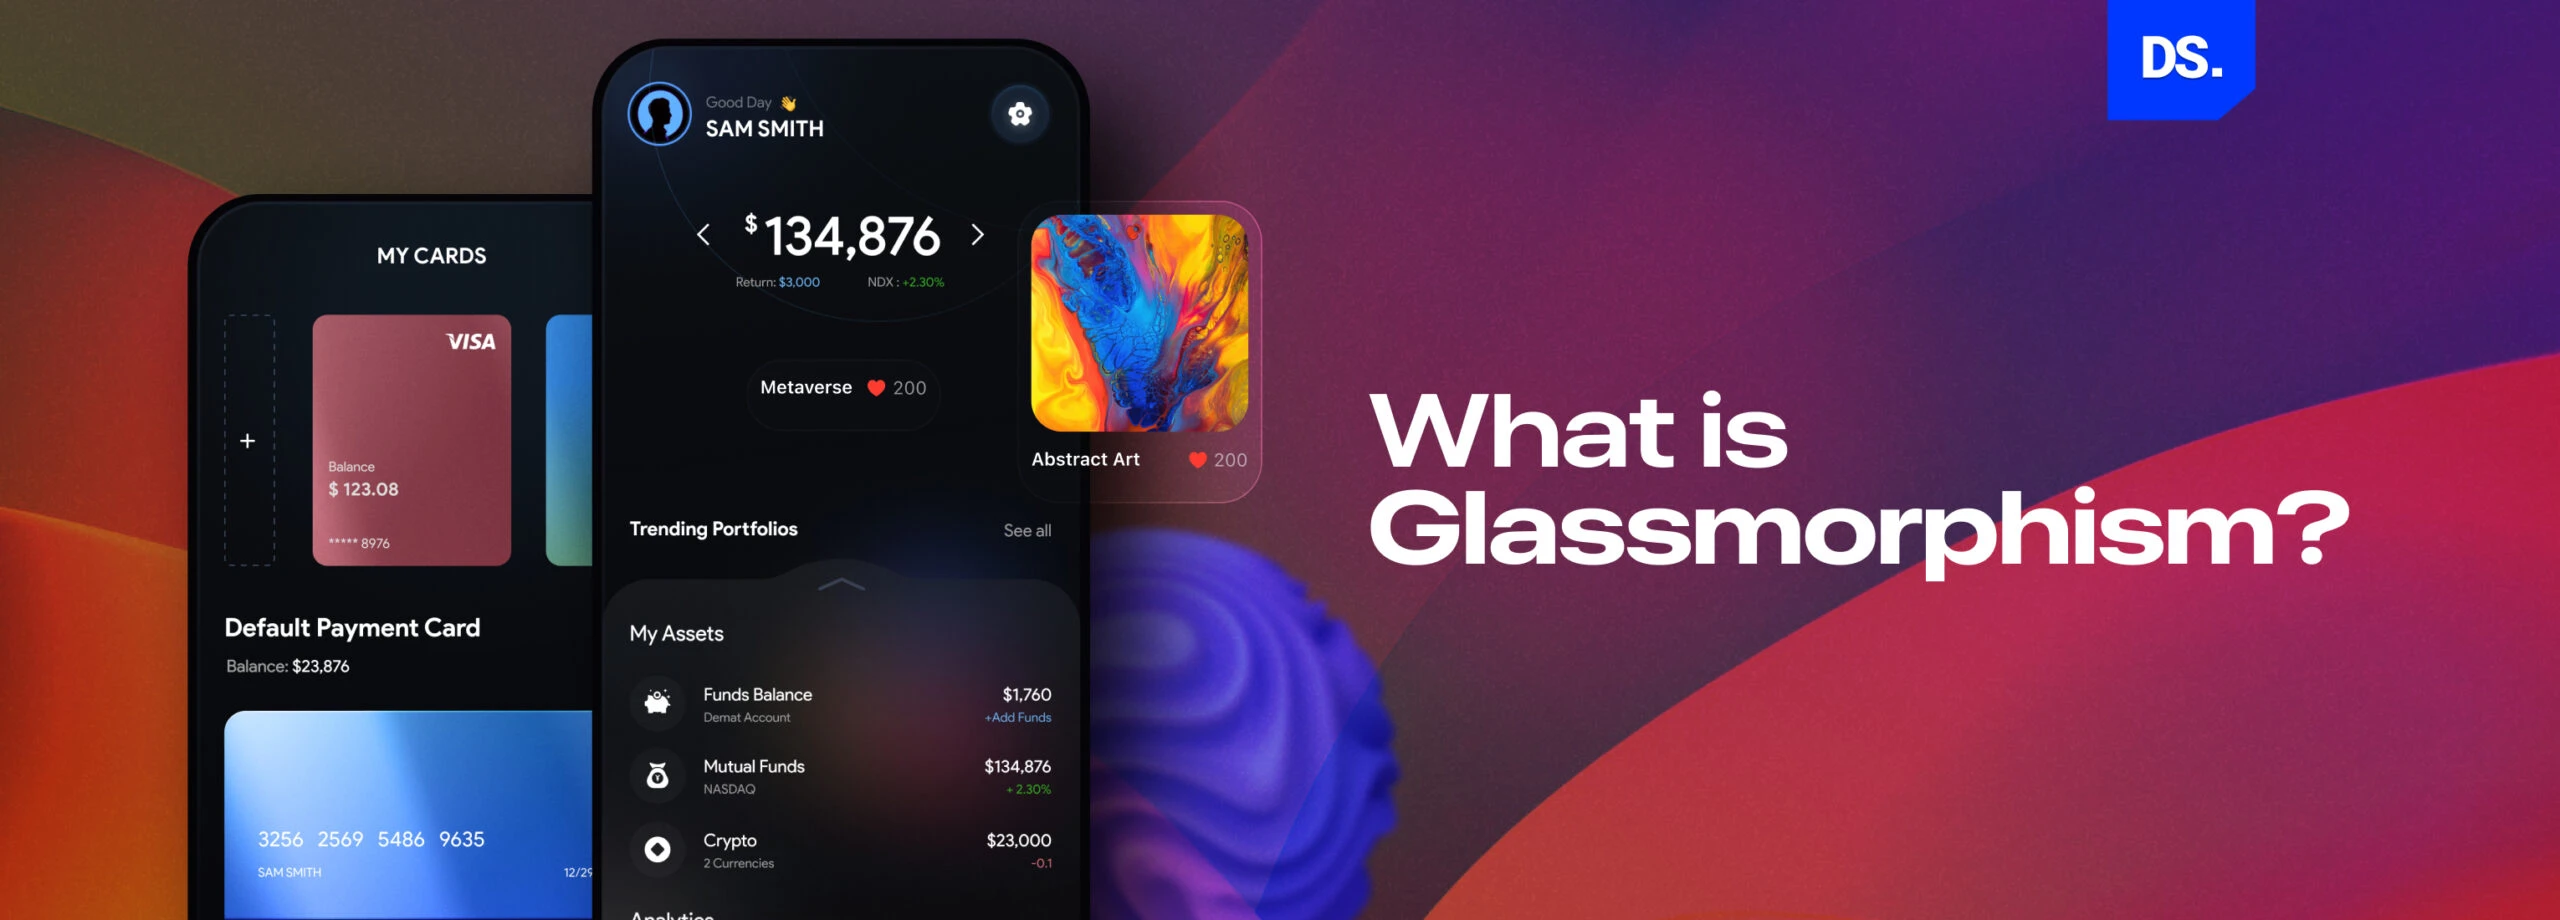 What is Glassmorphism